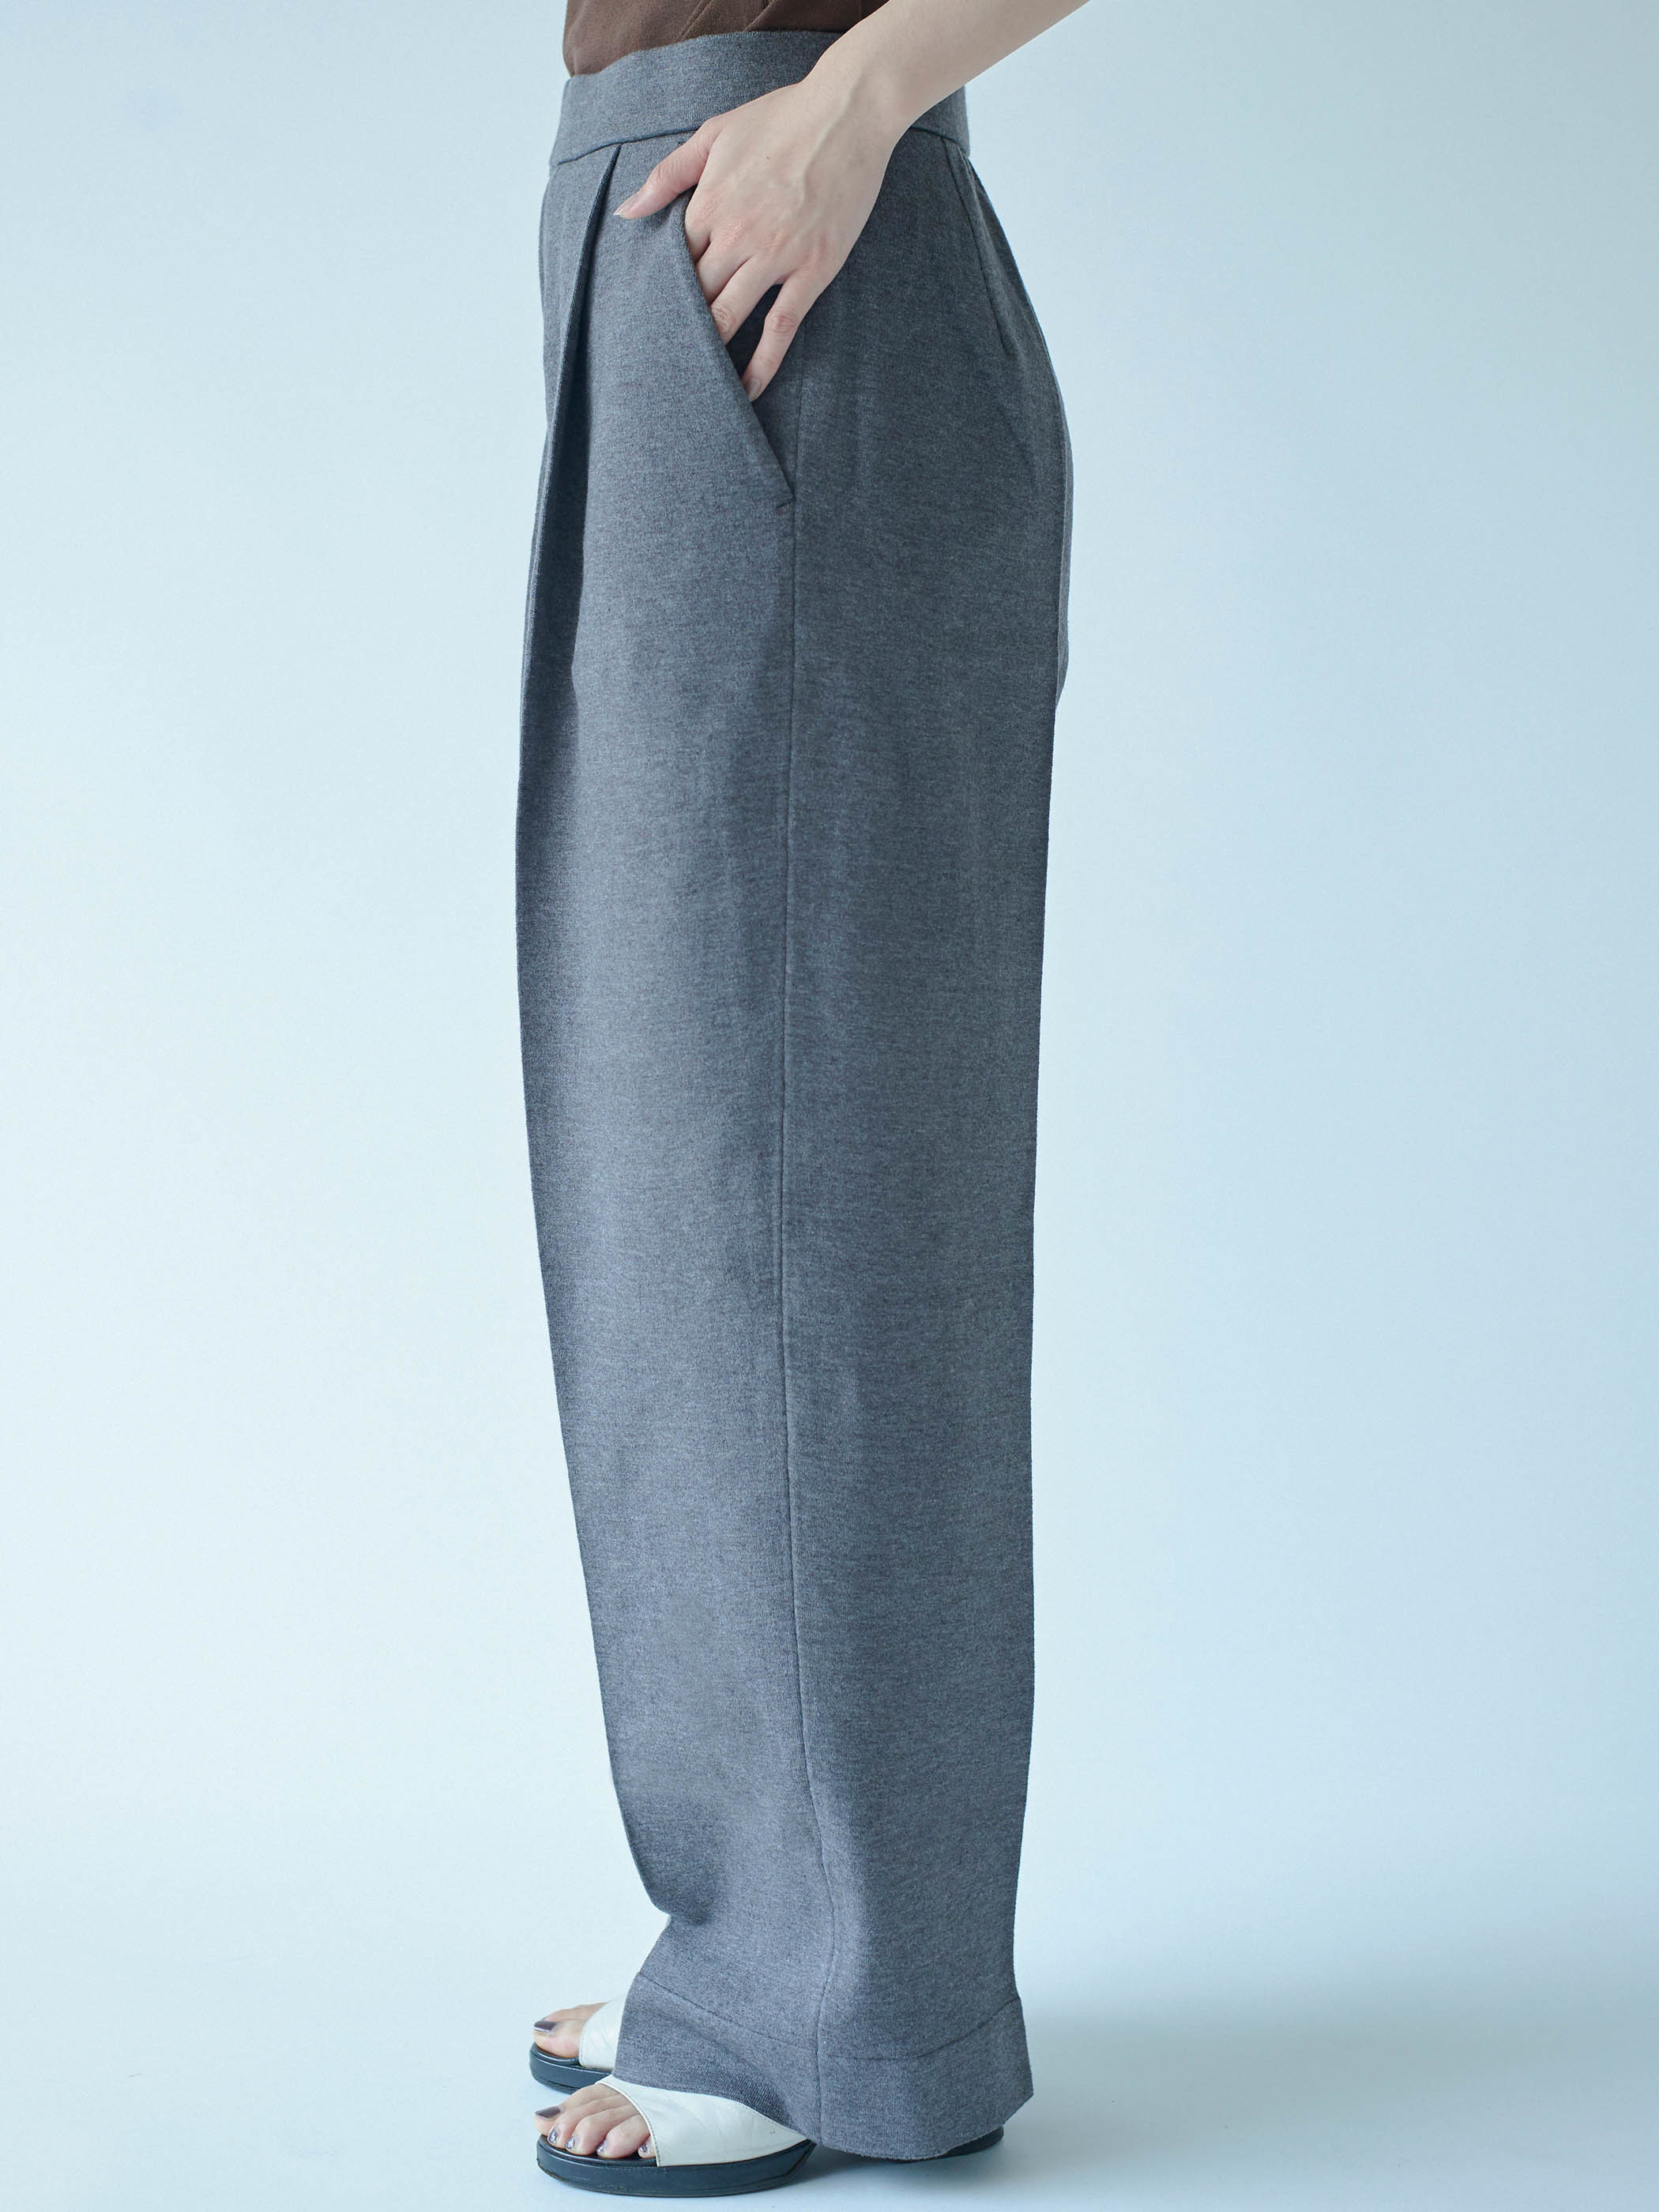 Work Wear collection Women's Wide Pants Gray(ワイドパンツ・グレー)